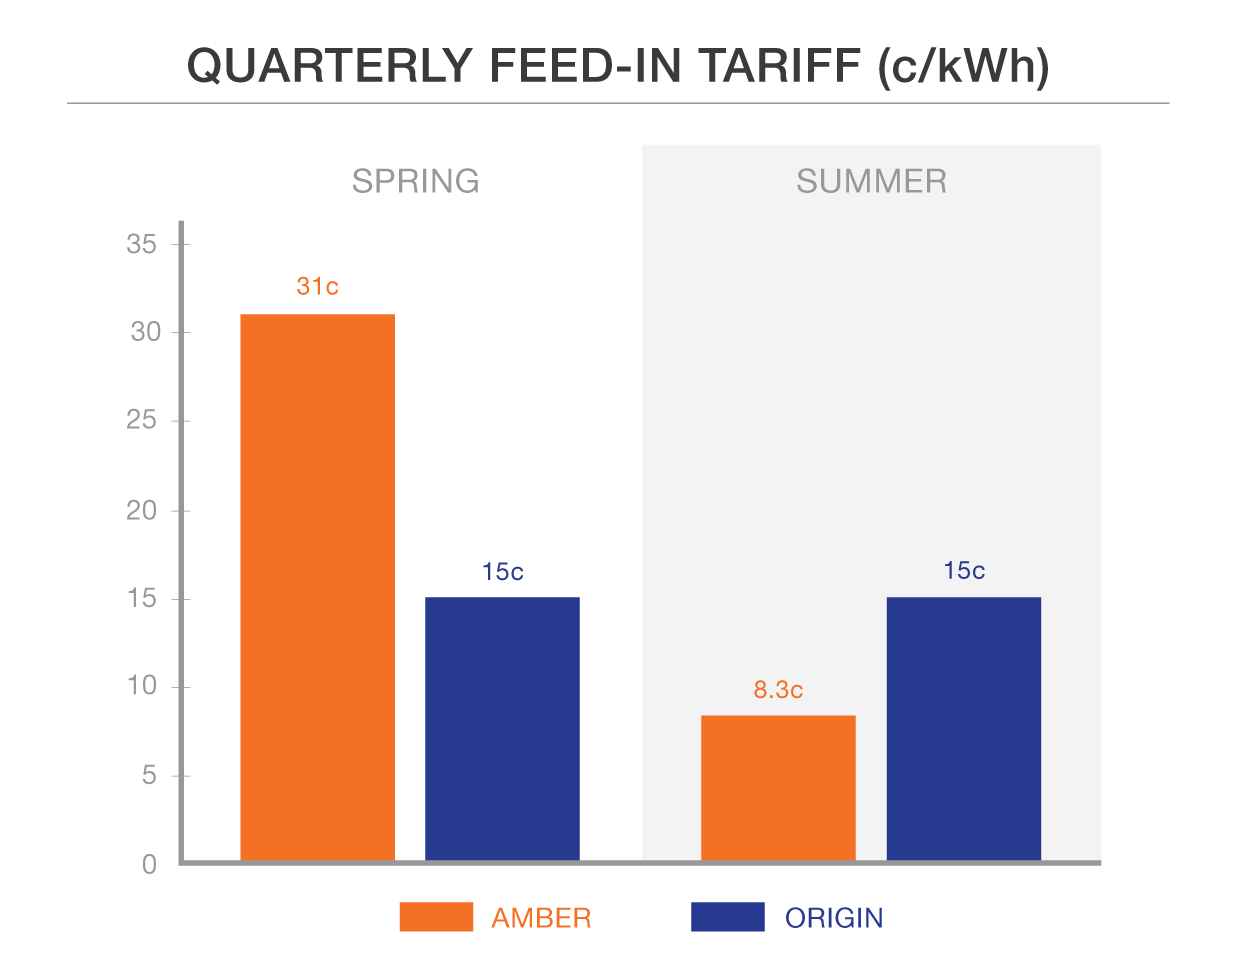 Amber vs. Origin quarterly feed-in tariff